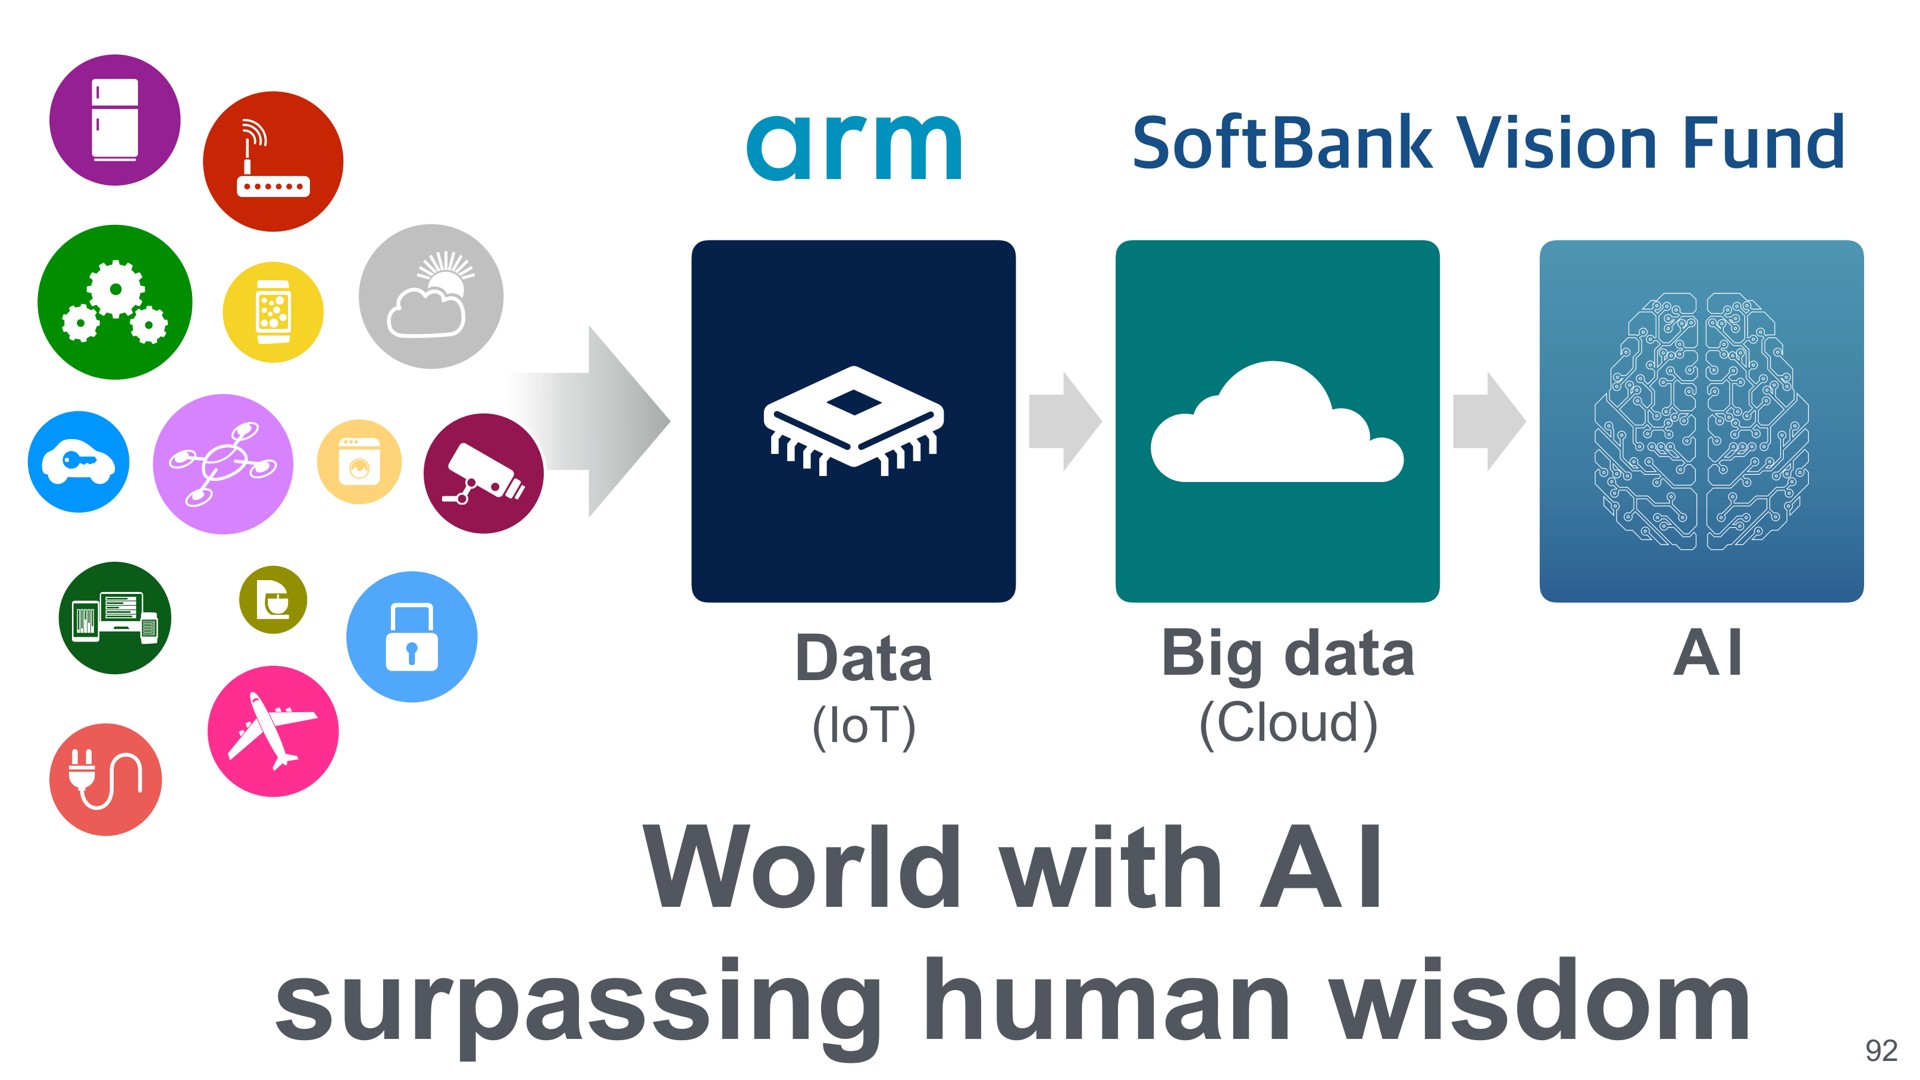 world with surpassing human wisdom arm vision fund data lot big data cloud | SoftBank